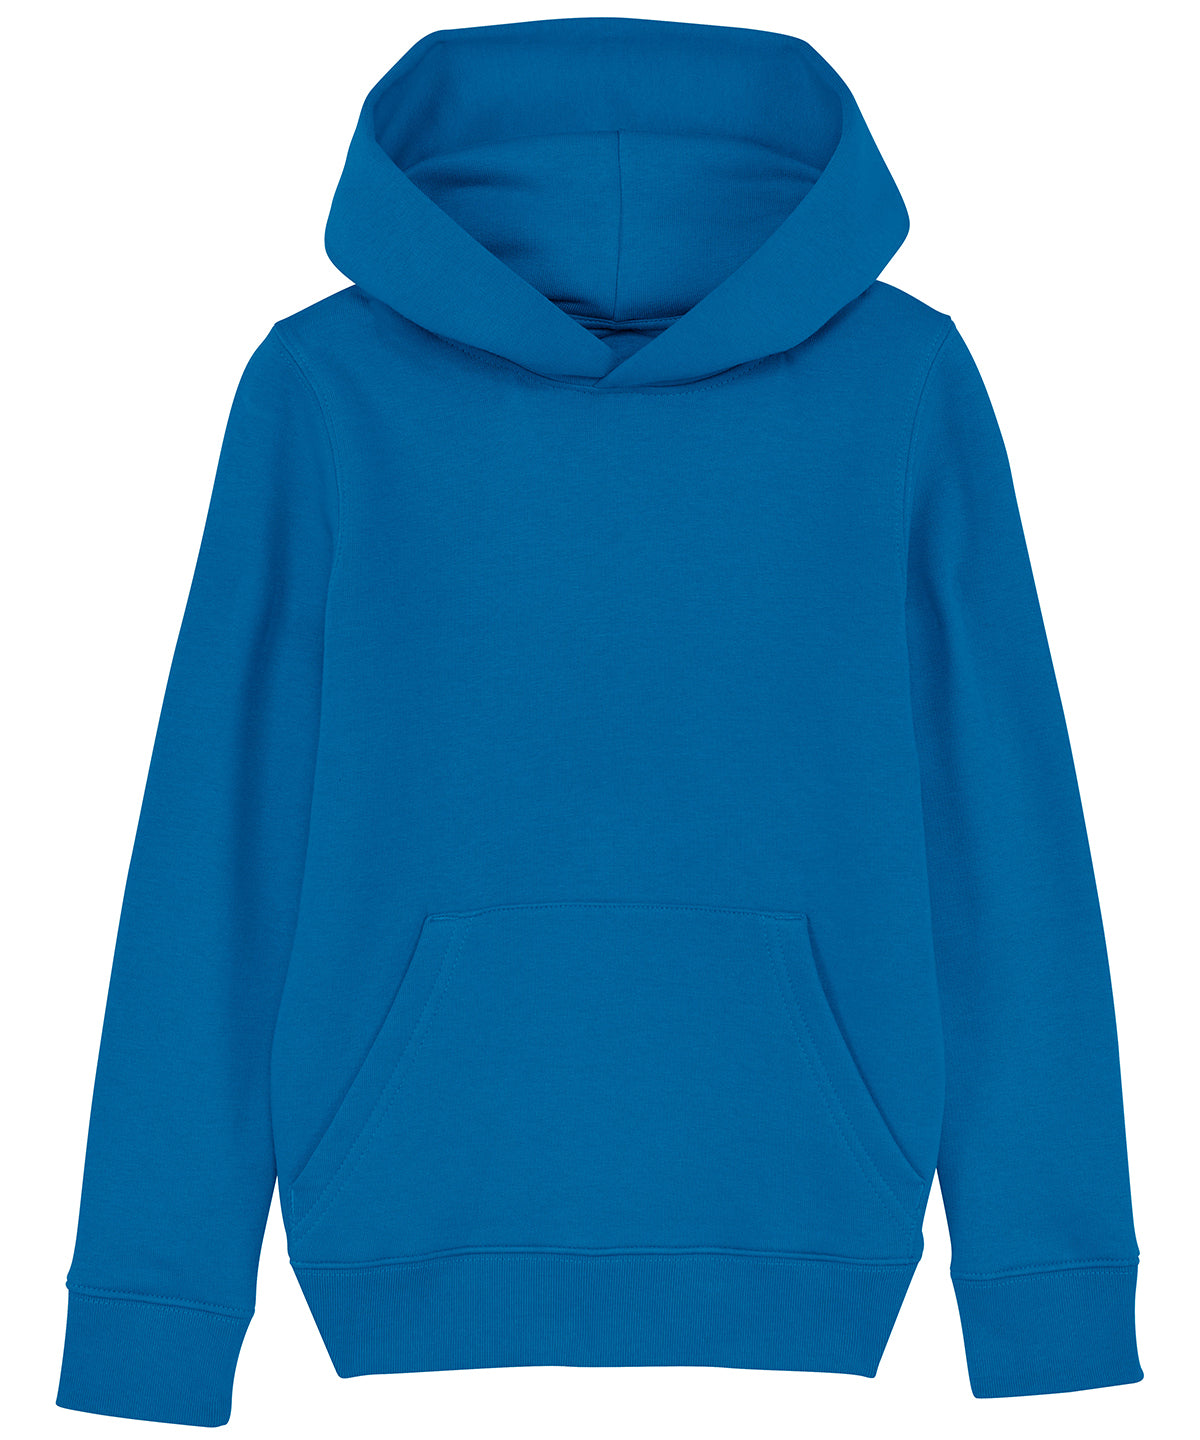 Stanley/Stella Kids Mini Cruiser Iconic Hoodie Sweatshirt  Royal Blue